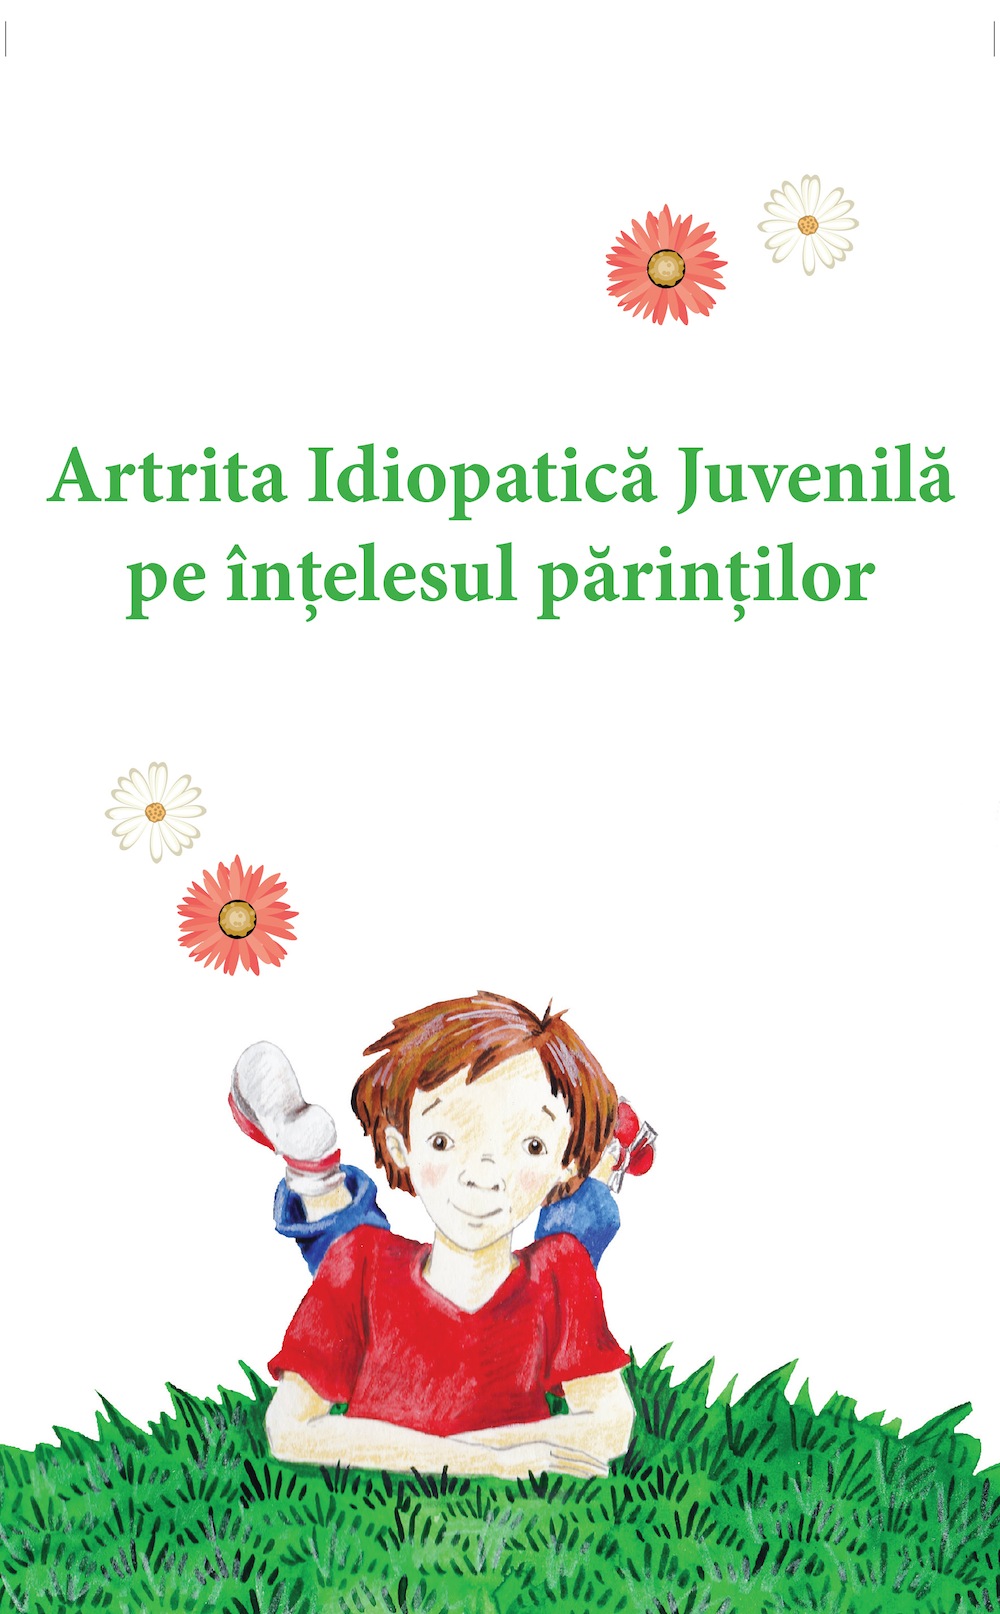 Artrita idiopatica juvenila, semne si tratament